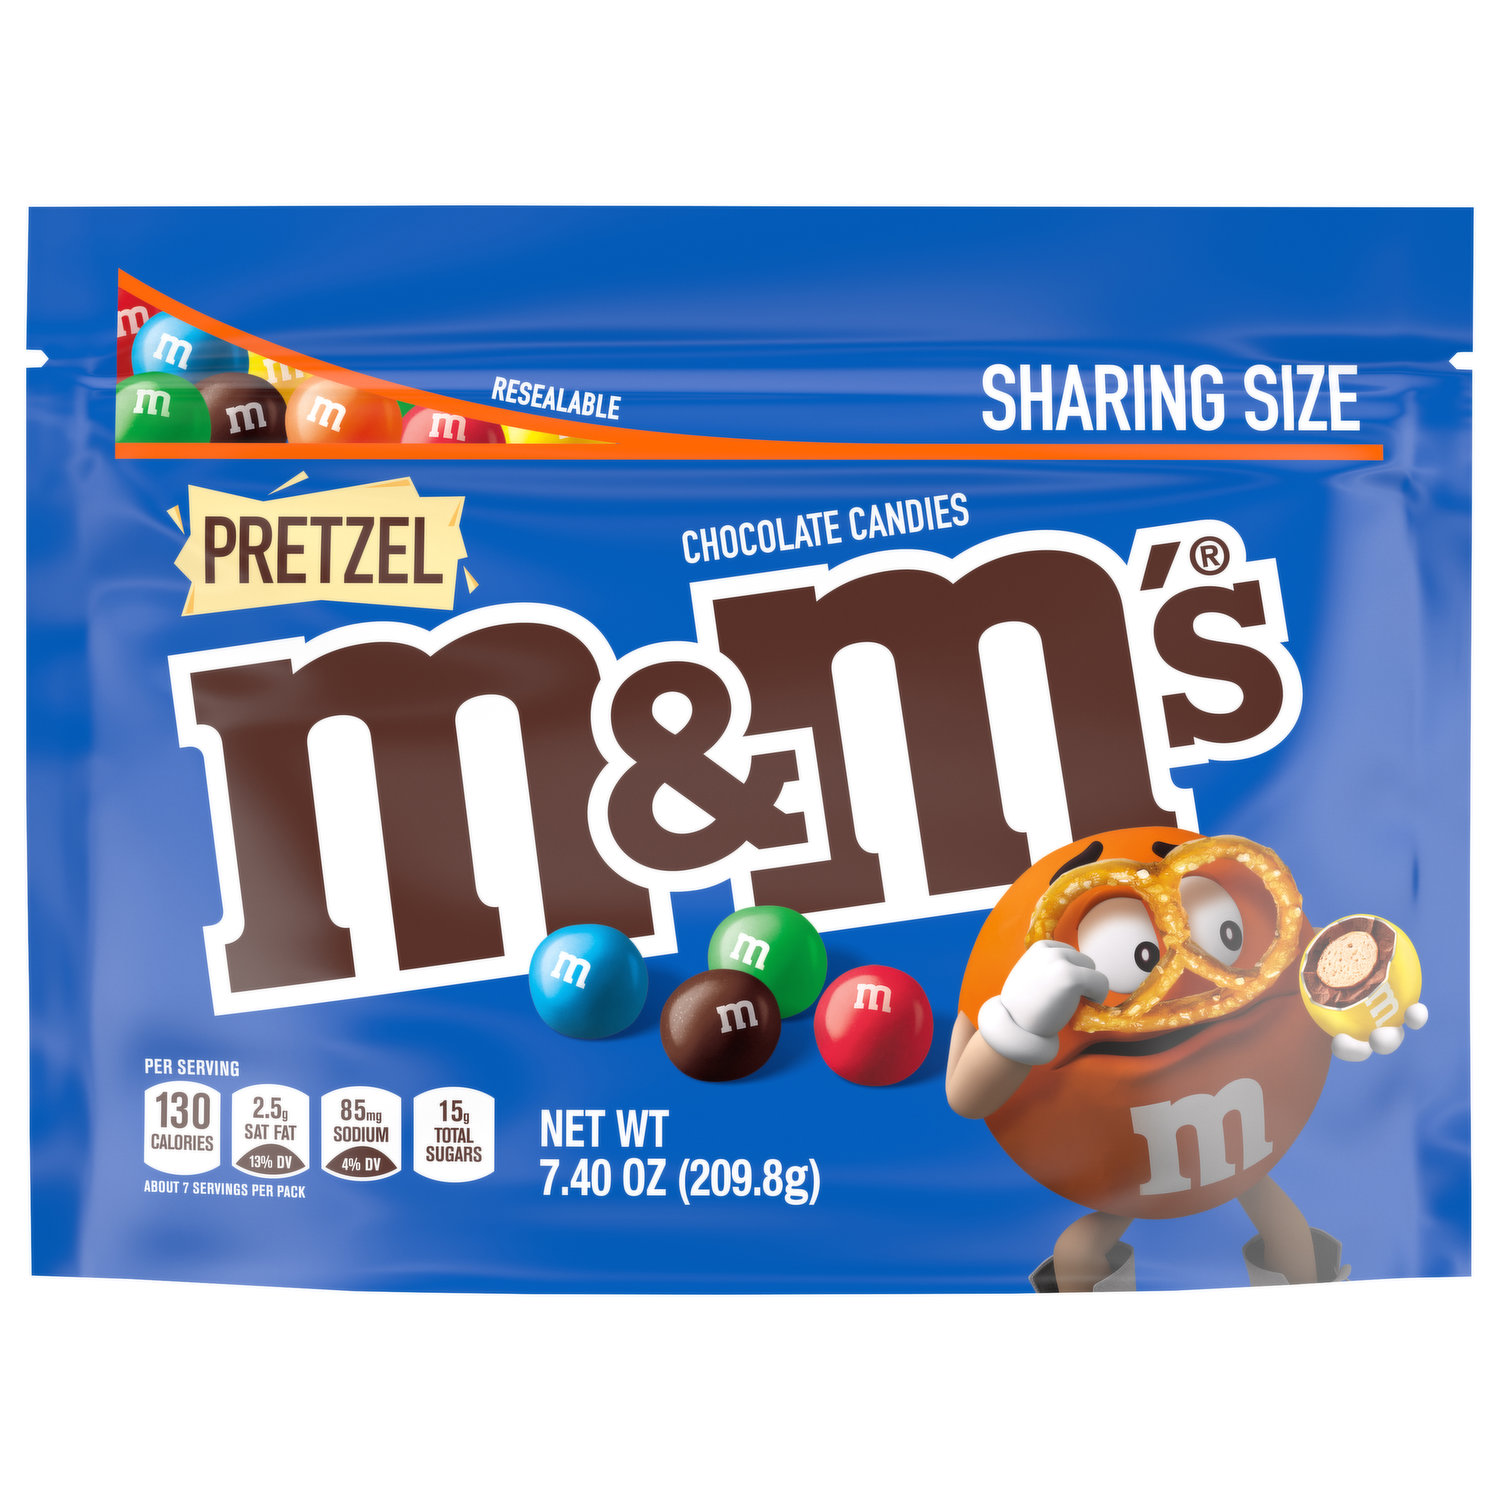 Crispy M&M's Chocolate Candies 8 oz. Sharing Size  - .com